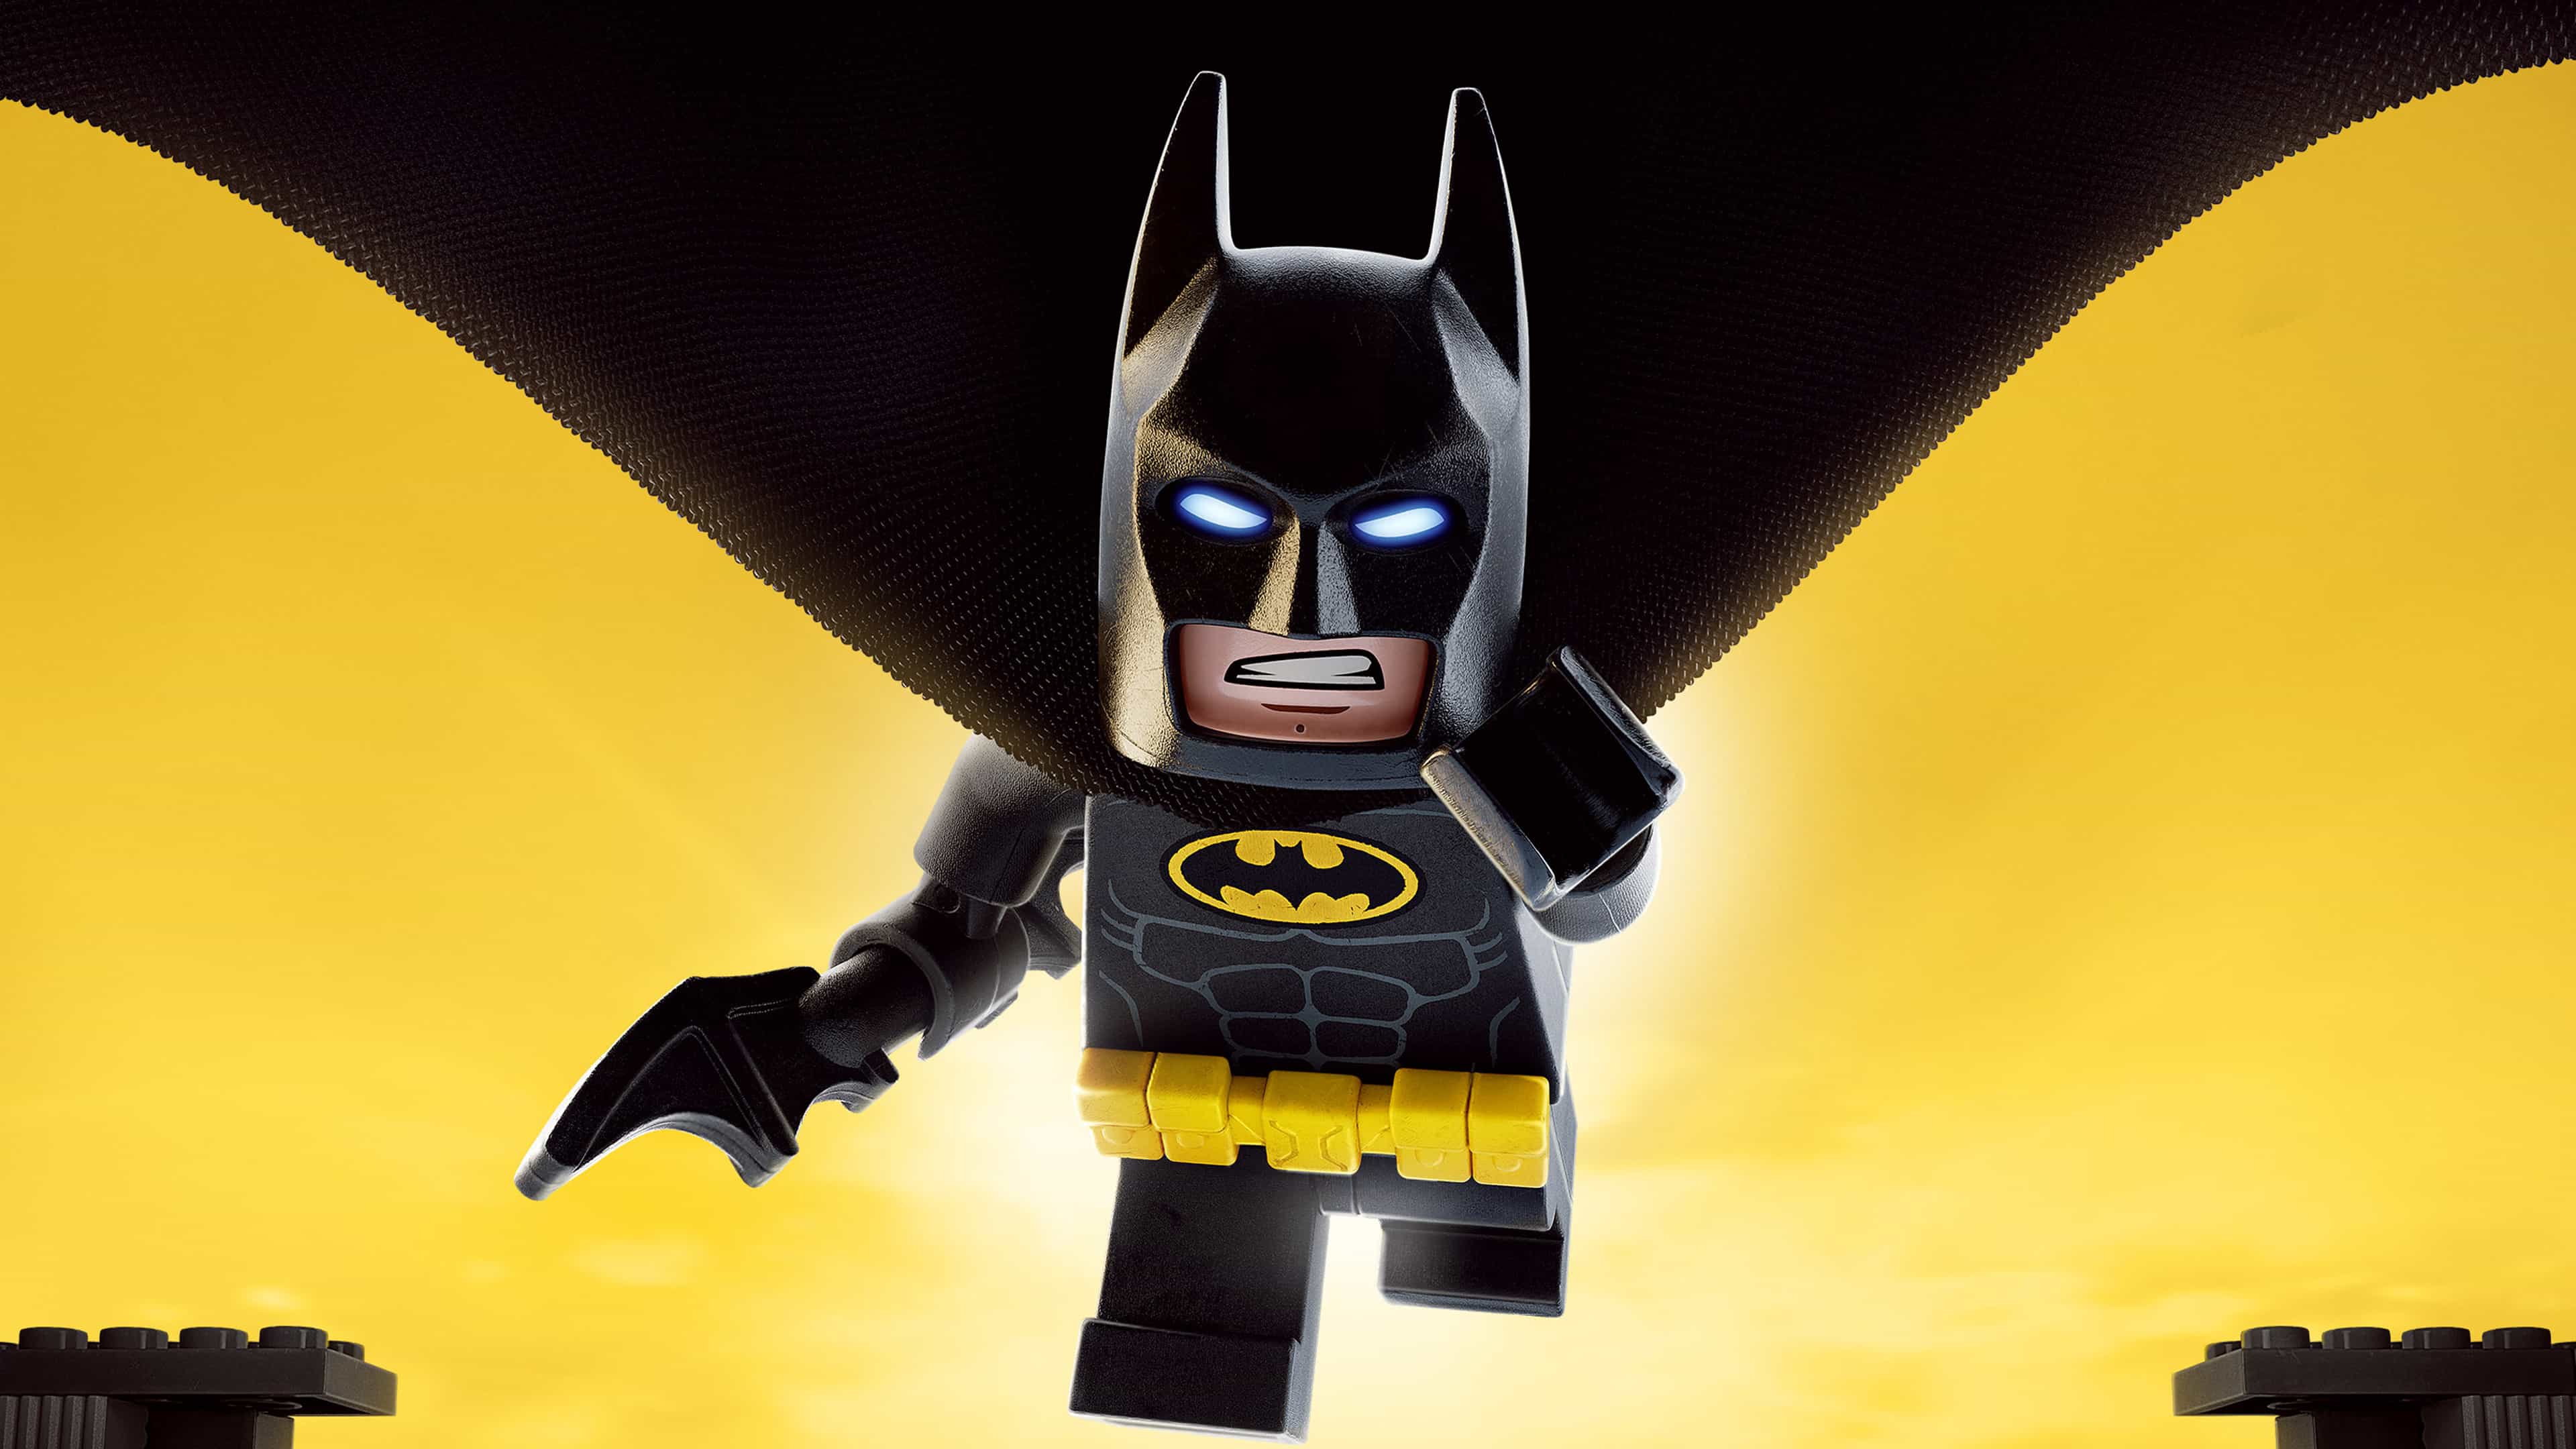 The Lego Batman Movie Batman Uhd 4k Wallpaper - Lego Batman Wallpaper 4k - HD Wallpaper 